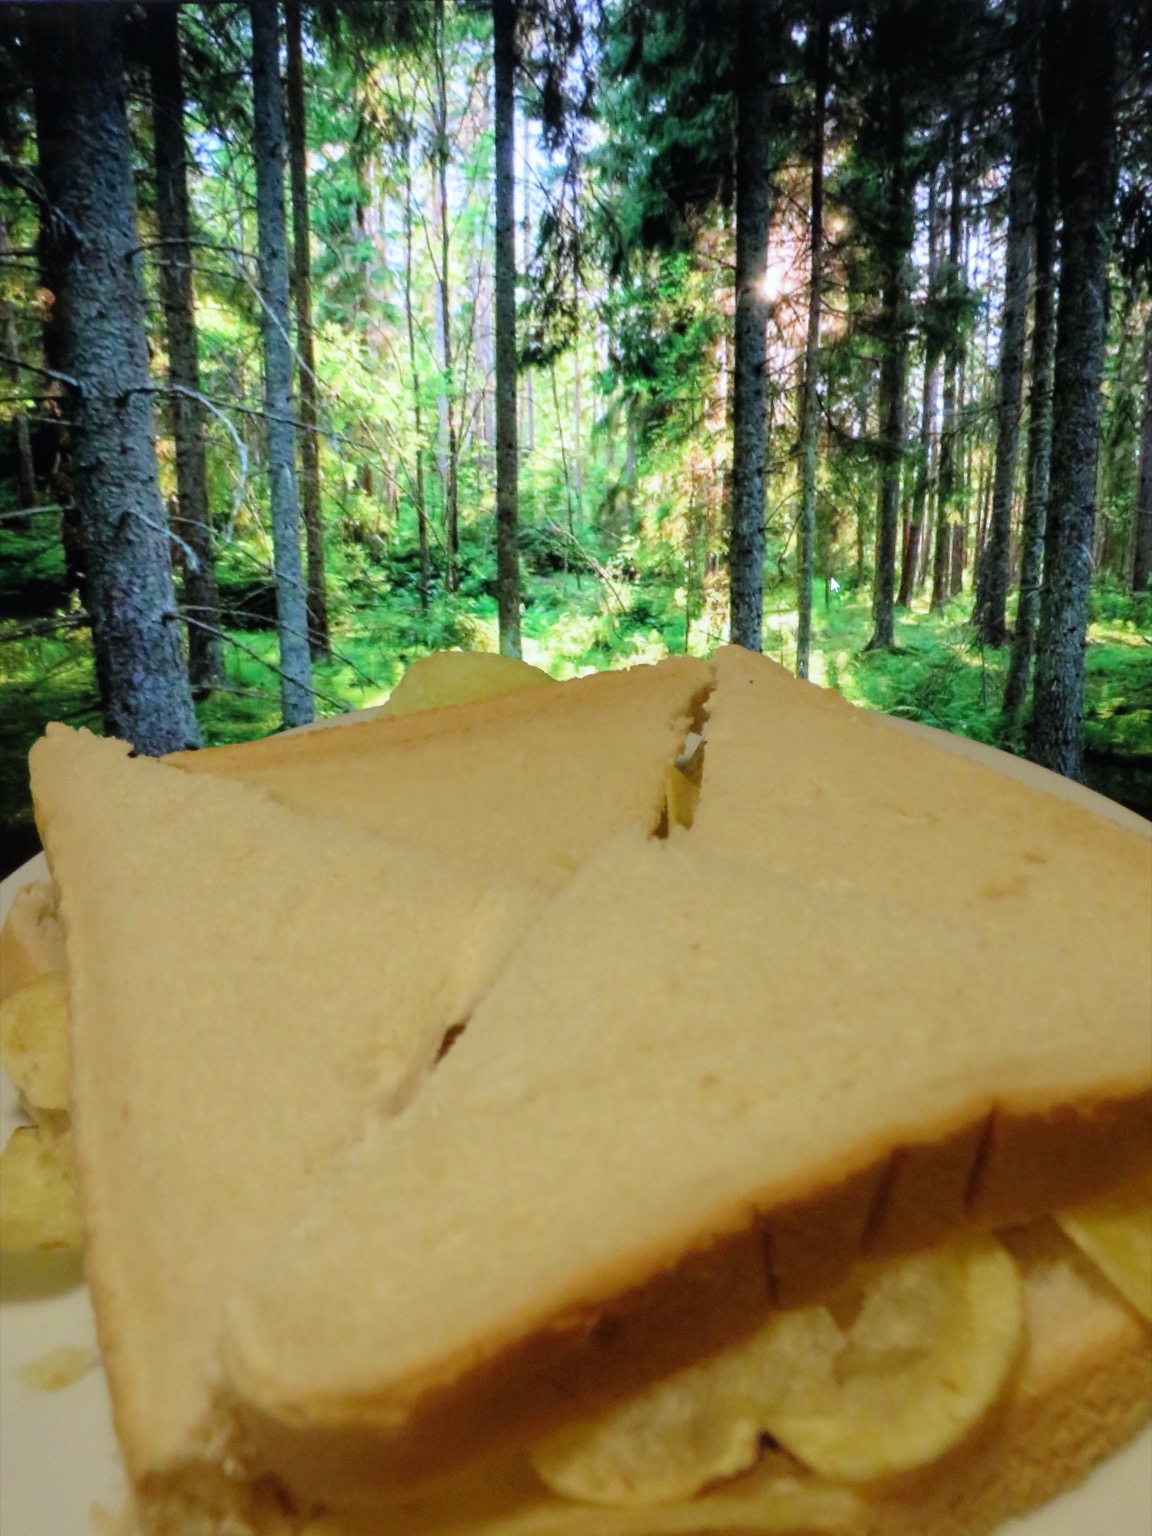 Quartered white crisp sandwich with woodland backdrop